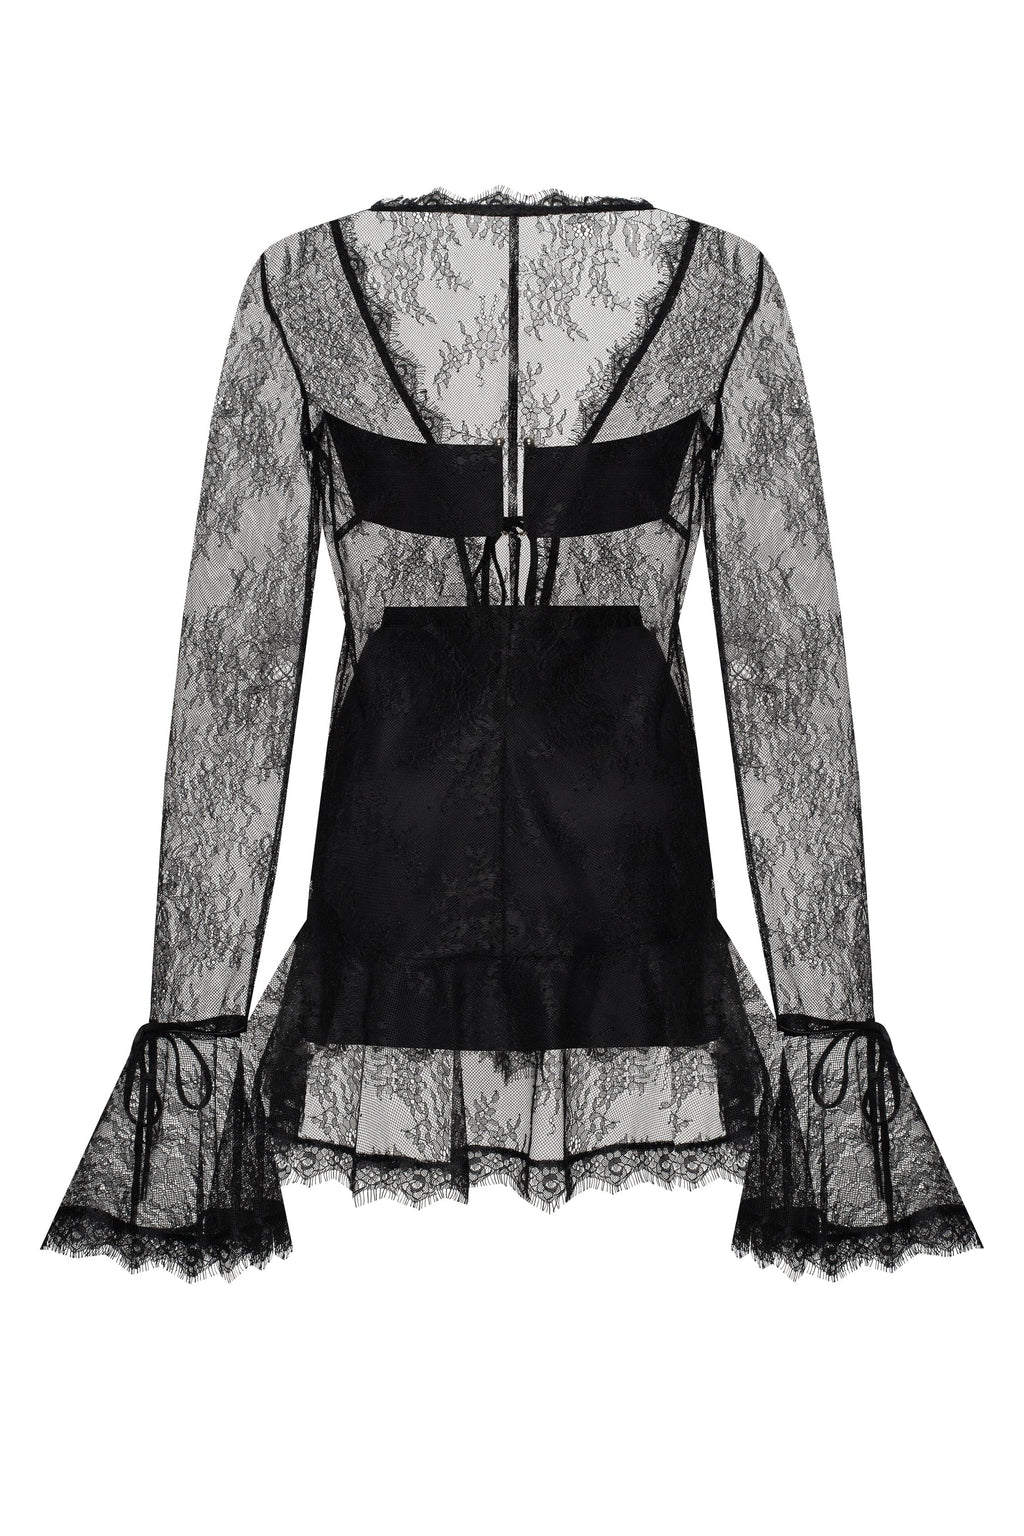 Alluring semi-transparent lace mini dress in black, Xo Xo